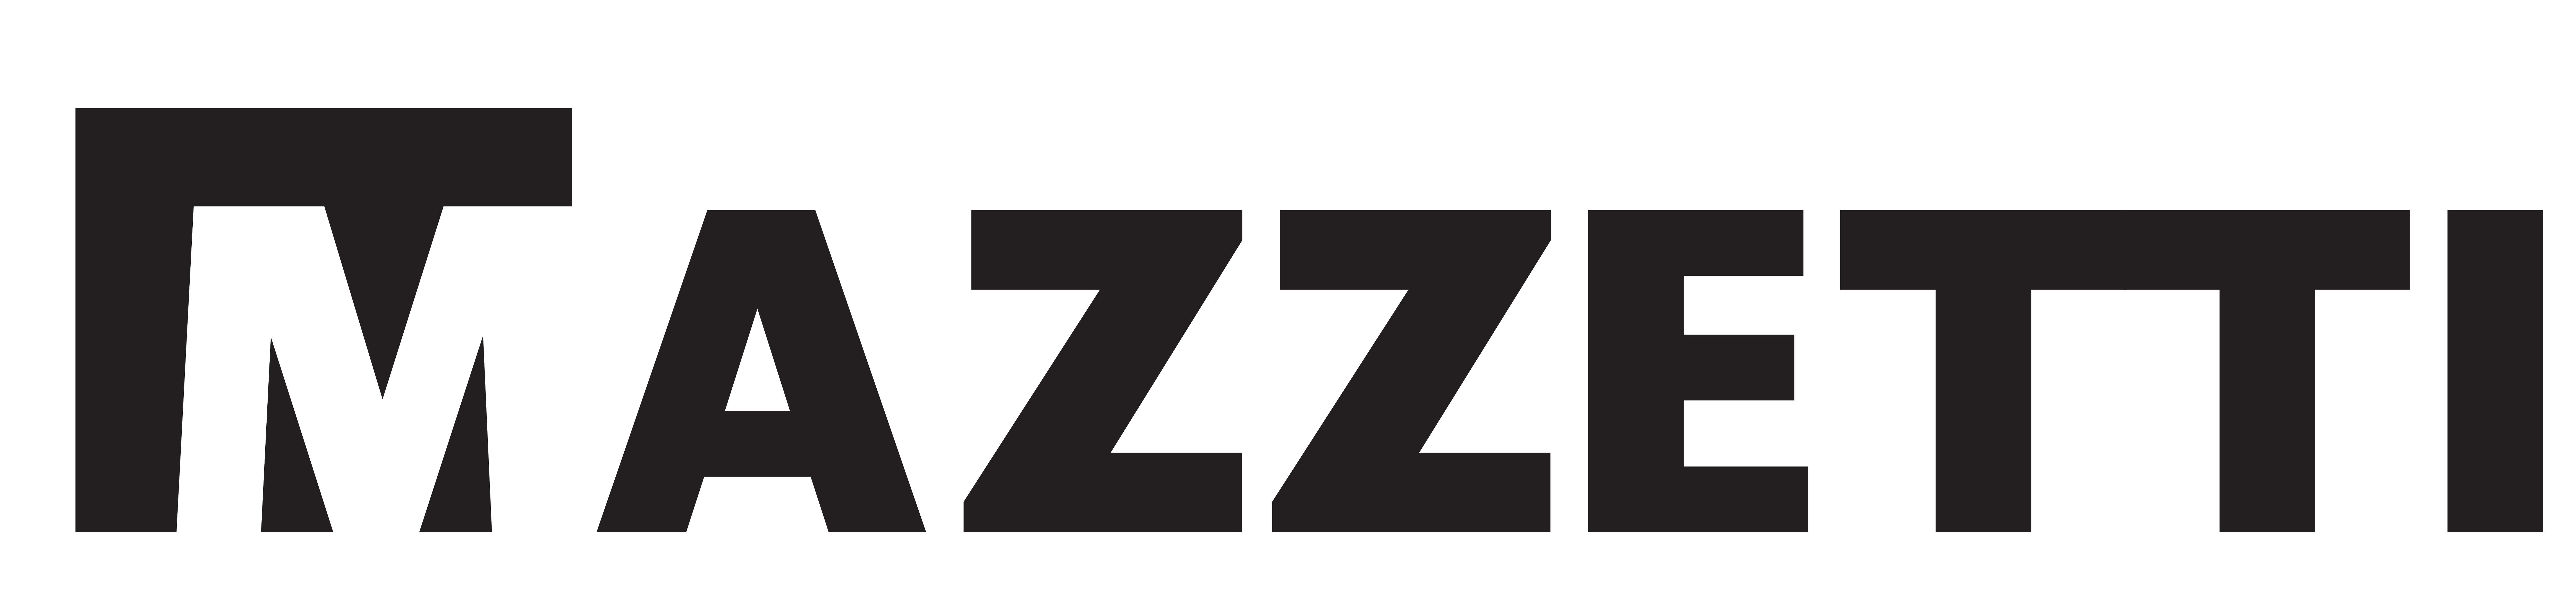 Mazzetti-Logo-Horizontal-web